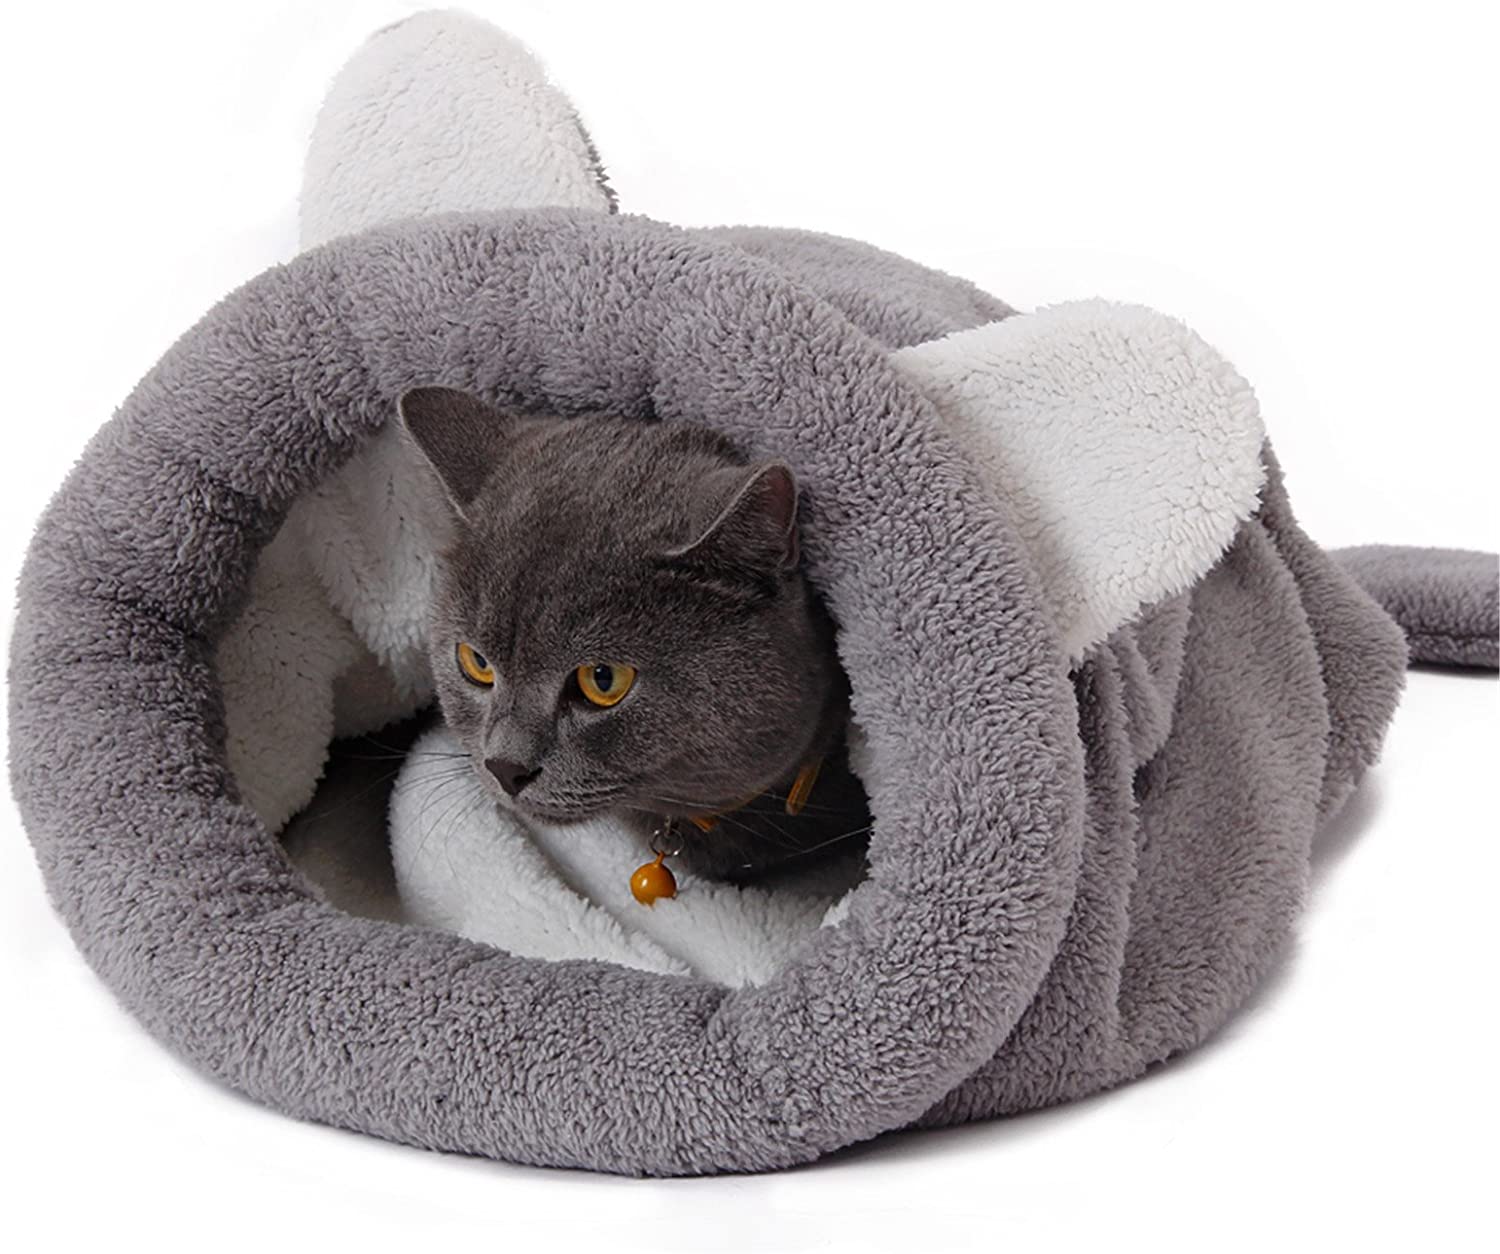 PAWZ Road Cat Sleeping Bag $14.99 (REG $25.99)